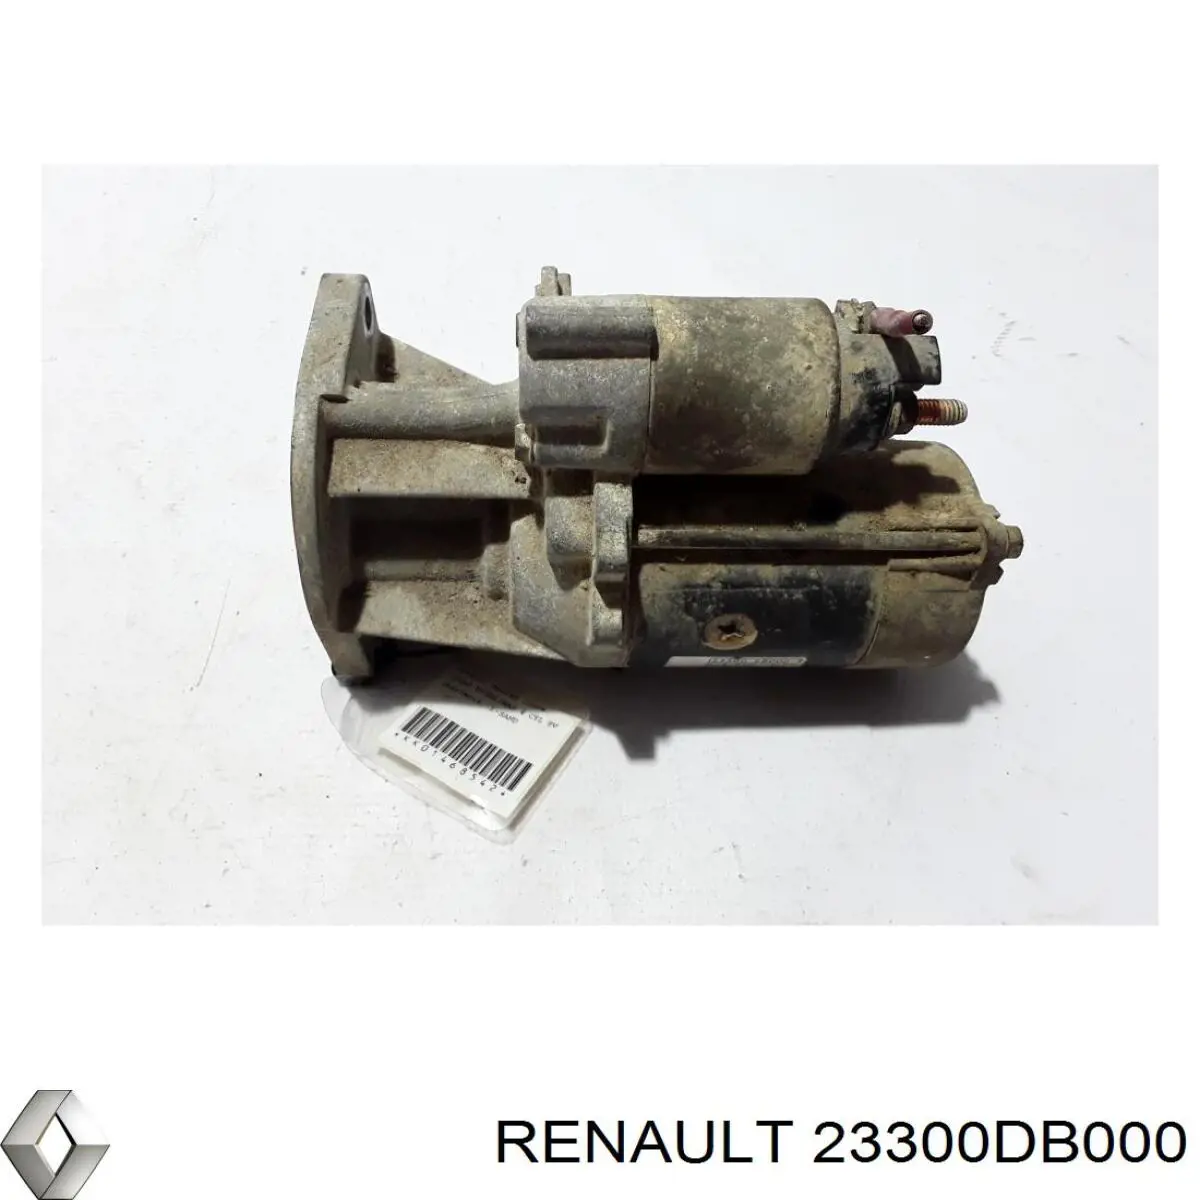 23300DB000 Renault (RVI) motor de arranque